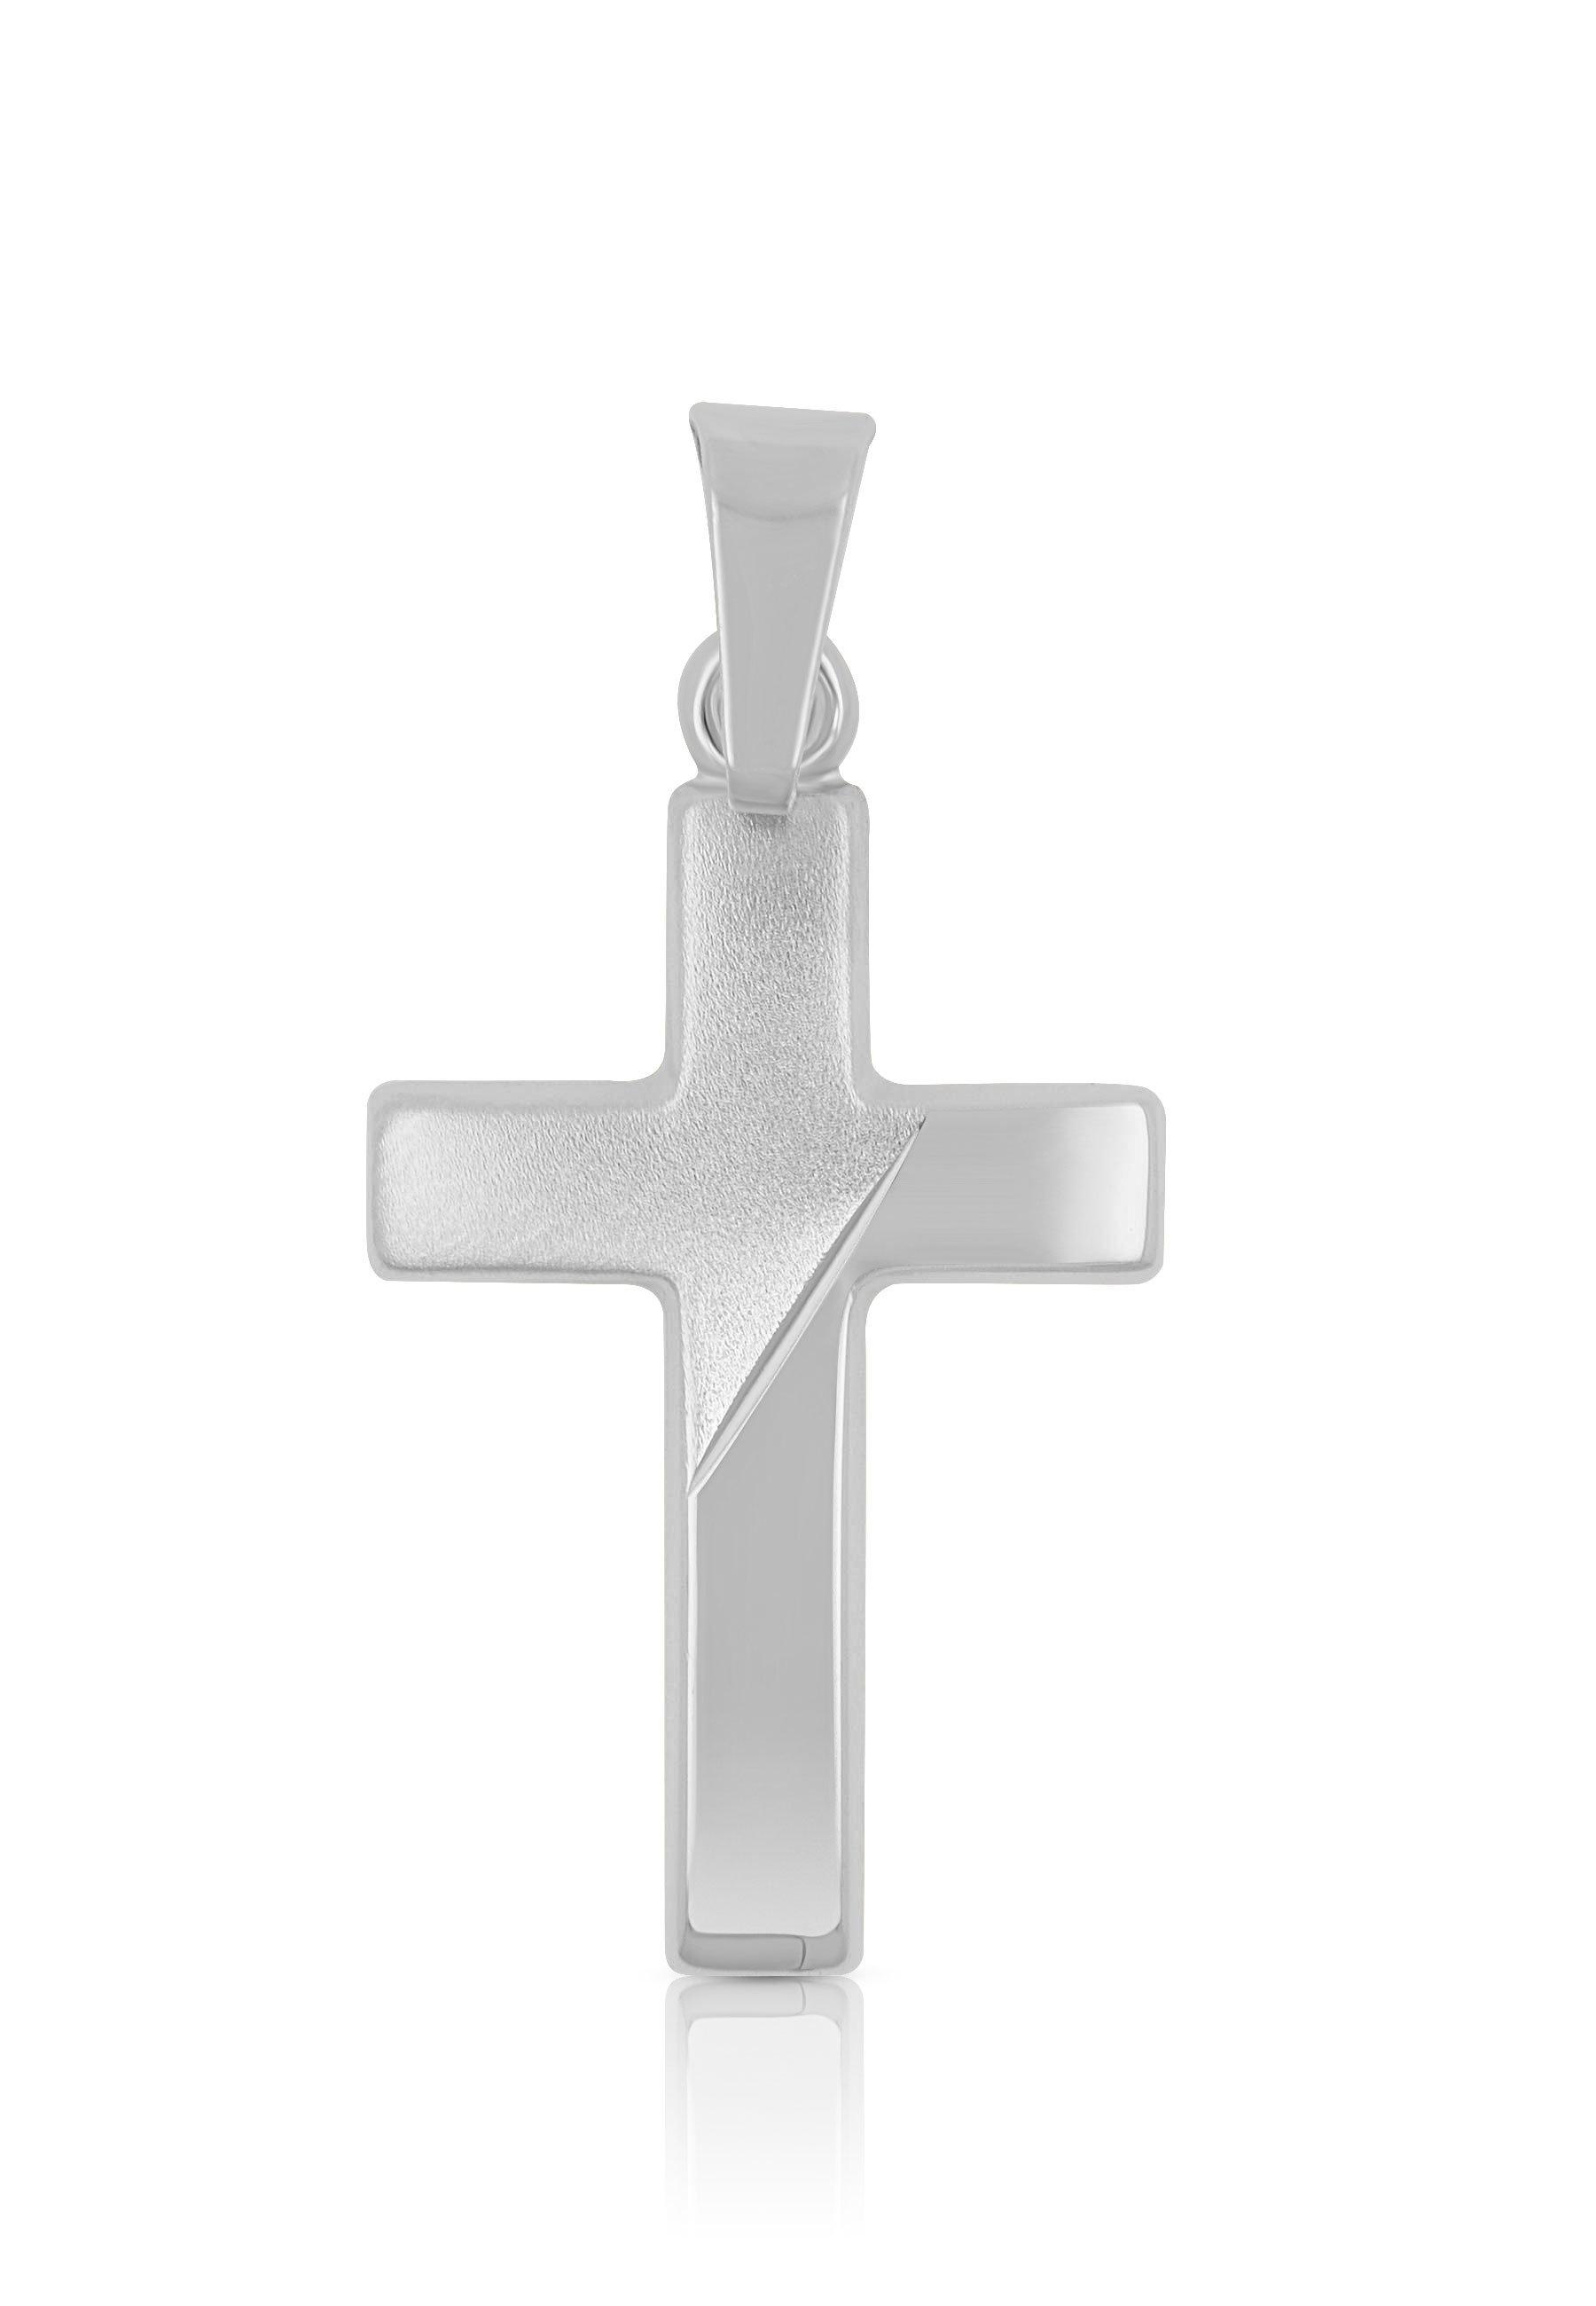 MUAU Schmuck  Pendentif croix or blanc 750, 25x12mm 